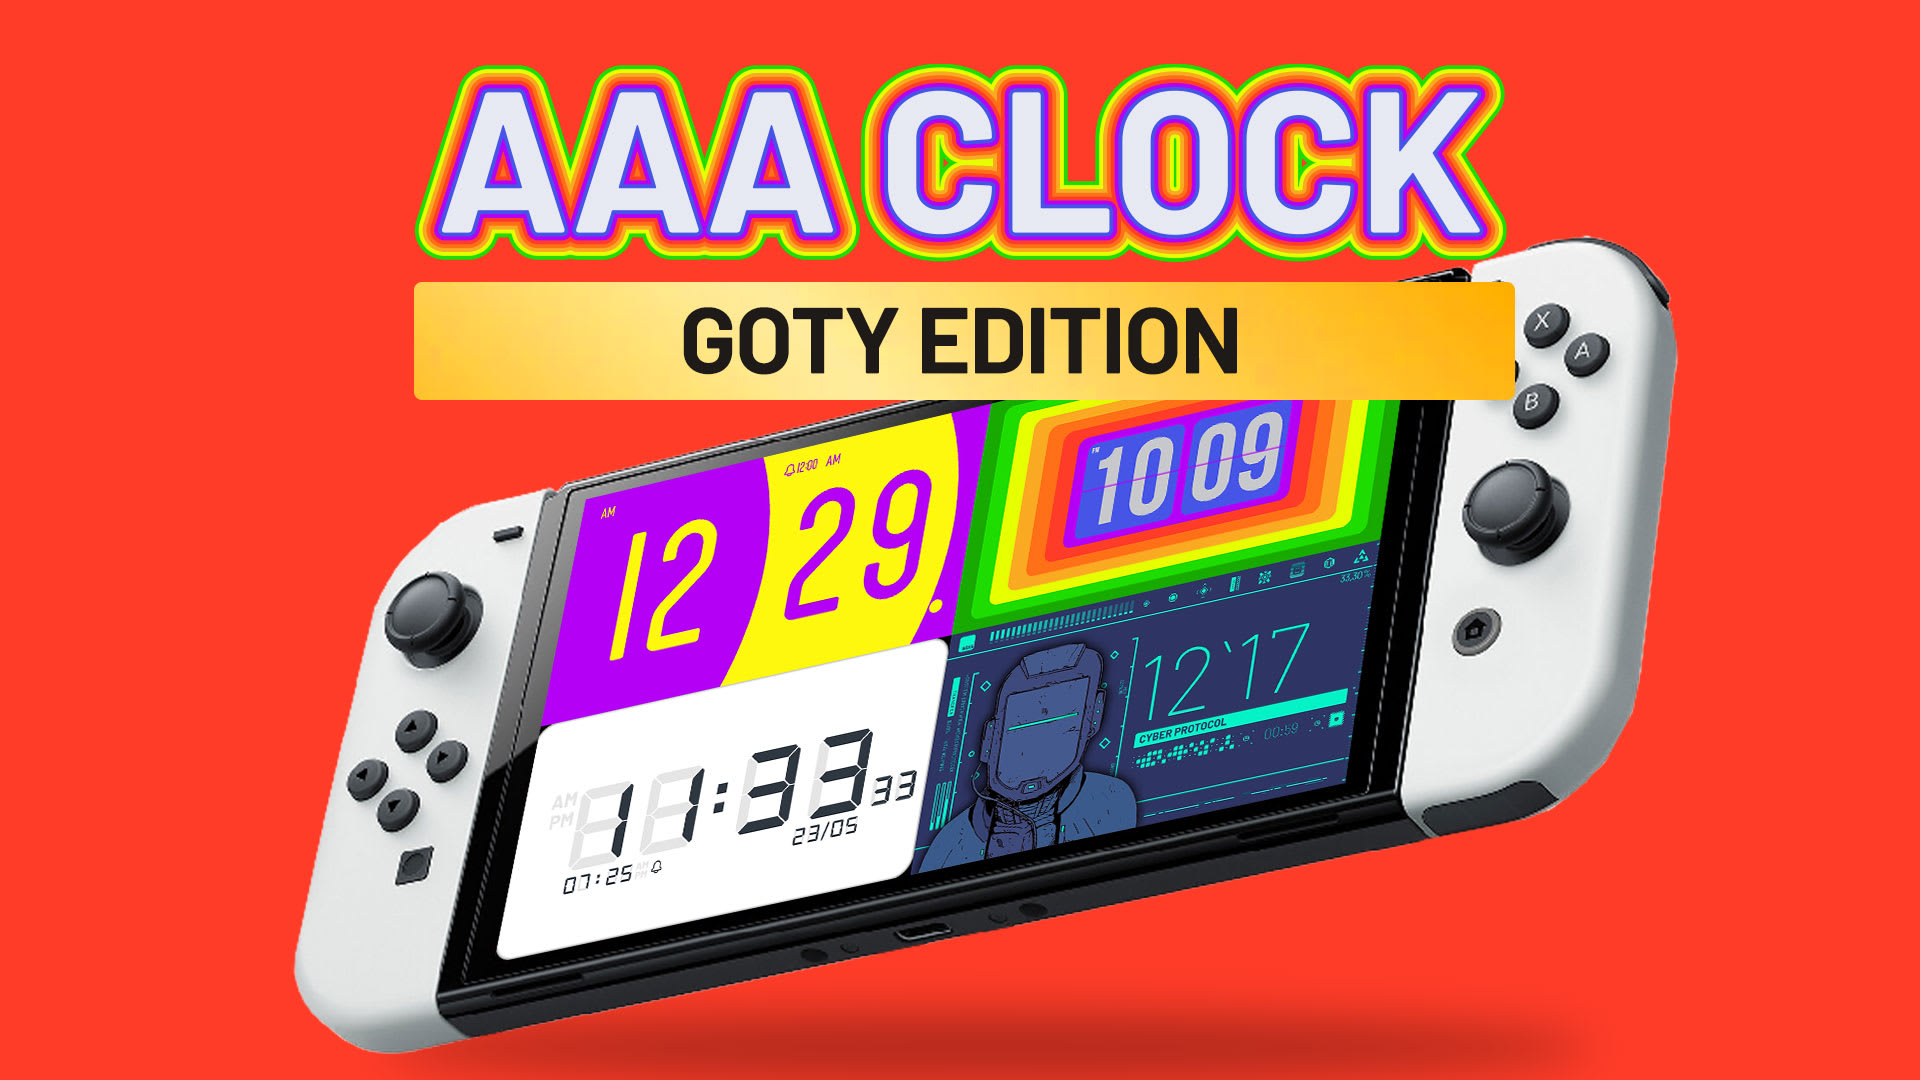 AAA Clock GOTY Edition